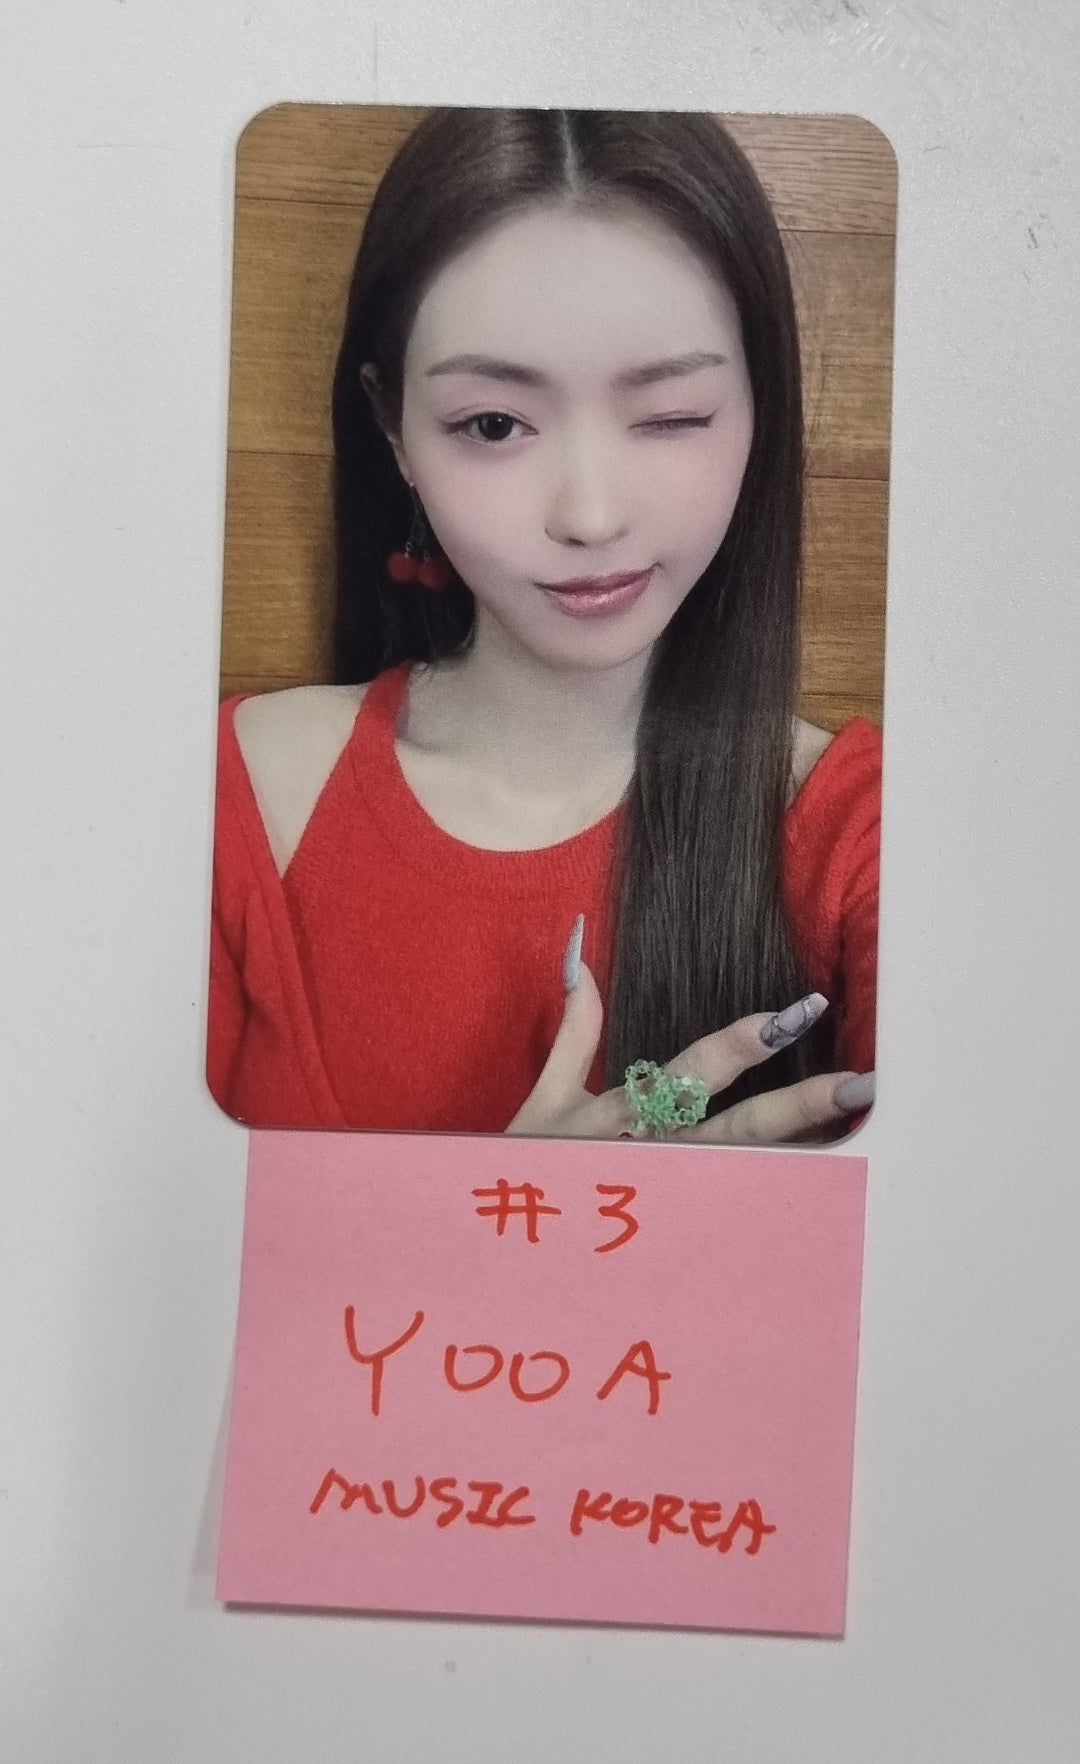 YOOA (Of Oh My Girl) "Borderline" - Music Korea Pre-Order Benefit Photocard [Kit Ver.] [24.3.21]